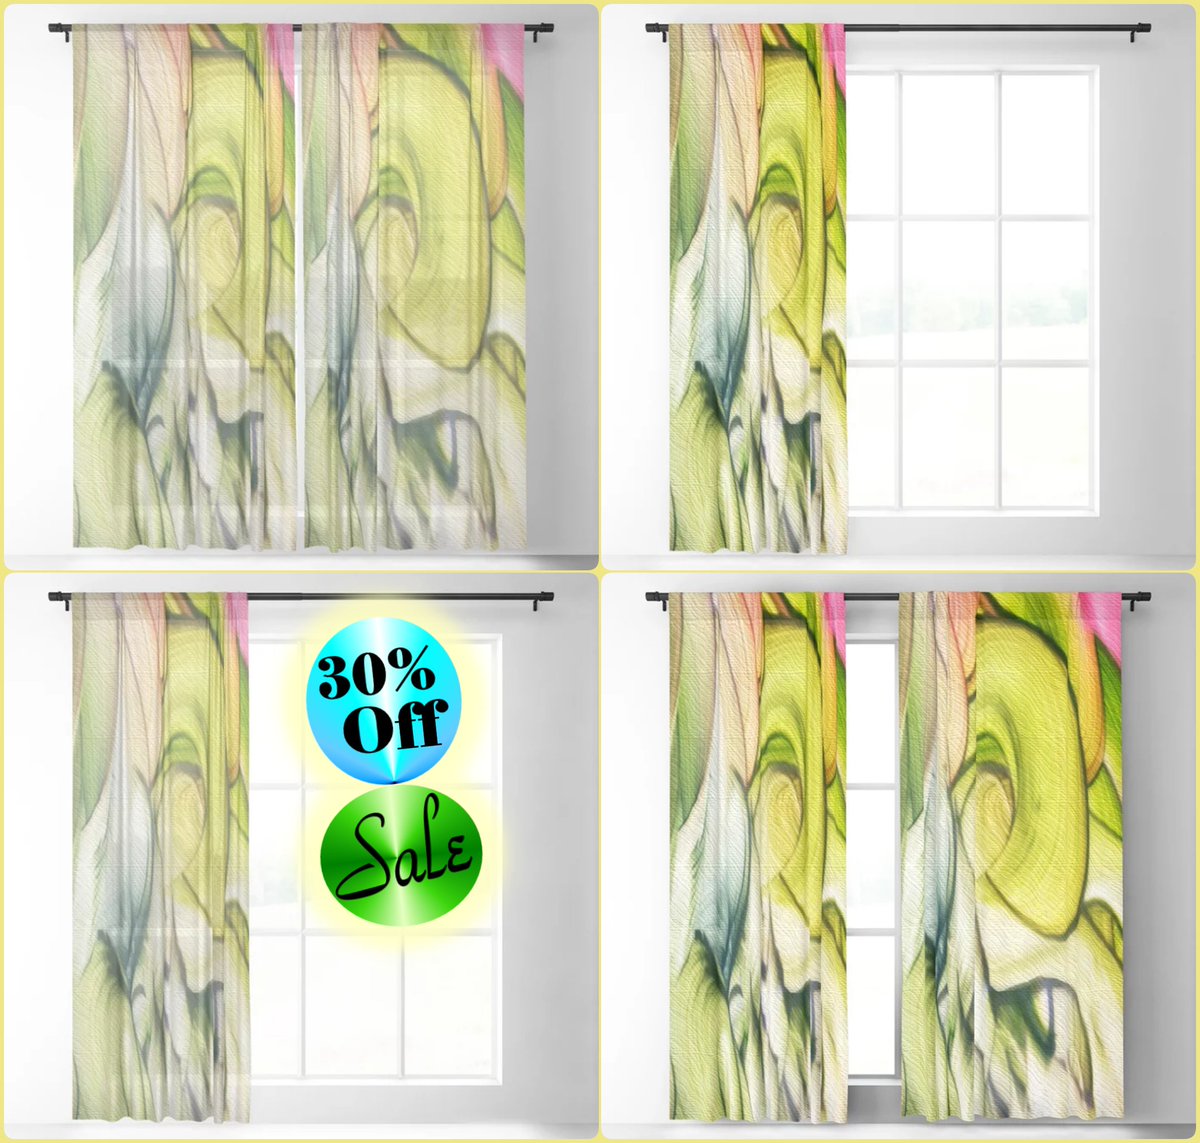 *SALE 30% Off* Sataran Sheer & Blackout Curtain~by Art Falaxy~ ~Exquisite Decor~ #artfalaxy #art #curtains #drapes #homedecor #society6 #swirls #accents #sheercurtains #blackoutcurtains #floorrugs society6.com/product/satara… society6.com/product/satara…